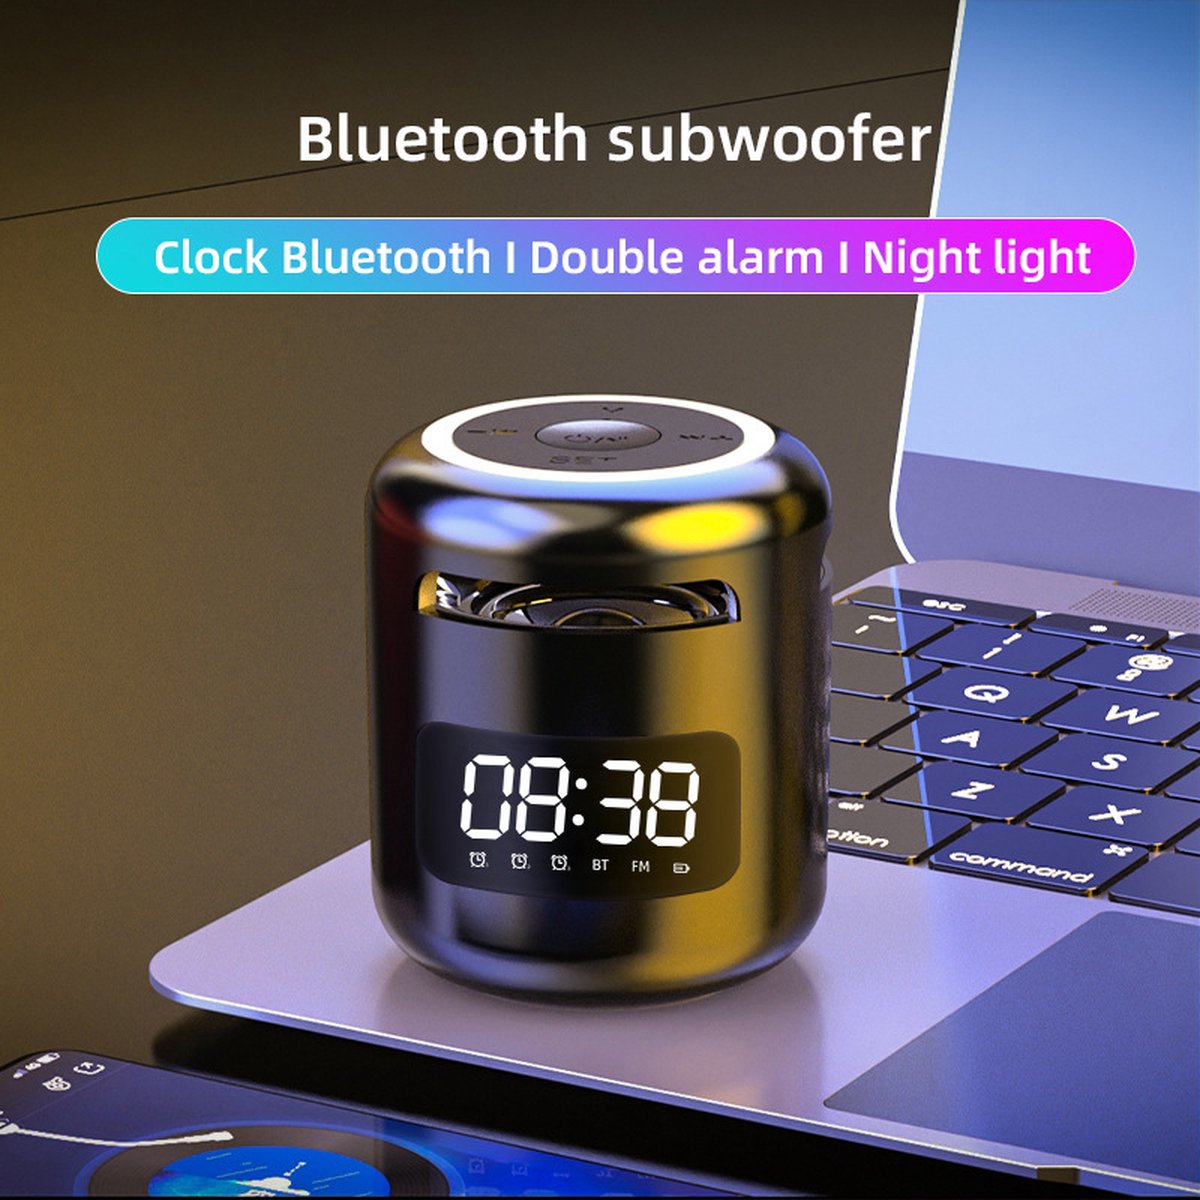 Pro-Care Draagbare Bluetooth 2.1 Stereo Alarm Klokradio Subwoofer Speaker 10W - LED Aflezen - FM Radio Functie - Micro USB aansluiting - AUX Aansluiting - TF card - Zwart